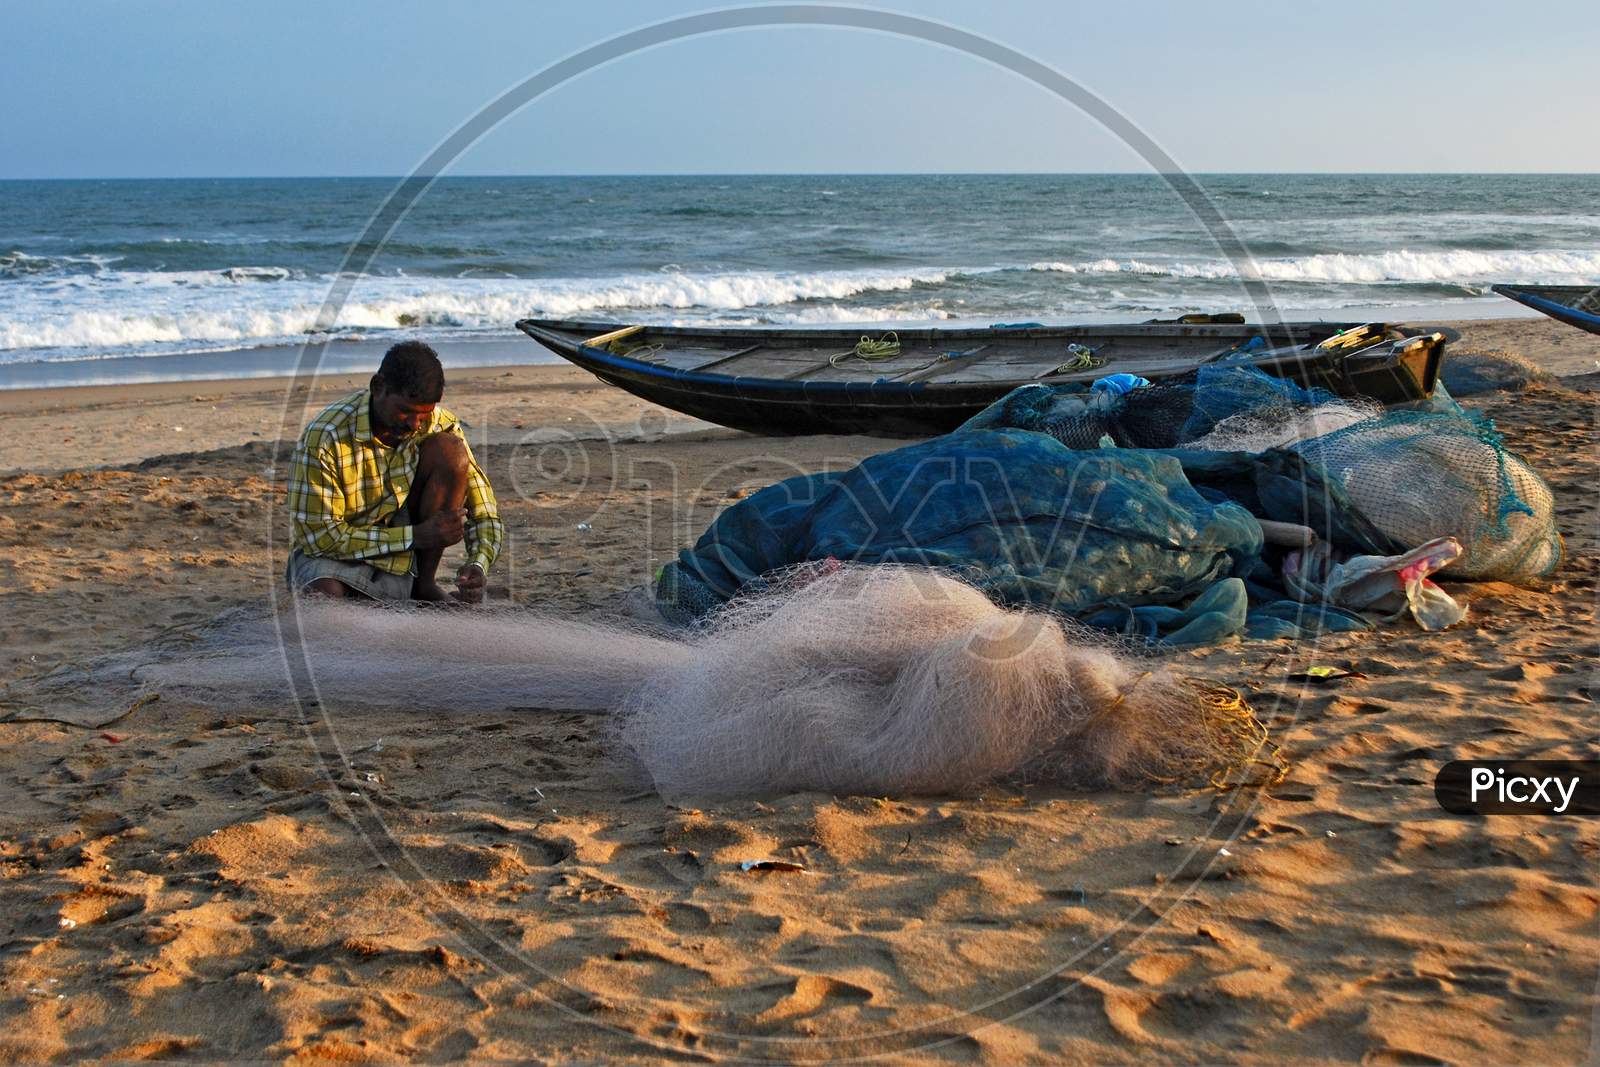 Fisherman working with a fishing net on the sea beach of Puri.